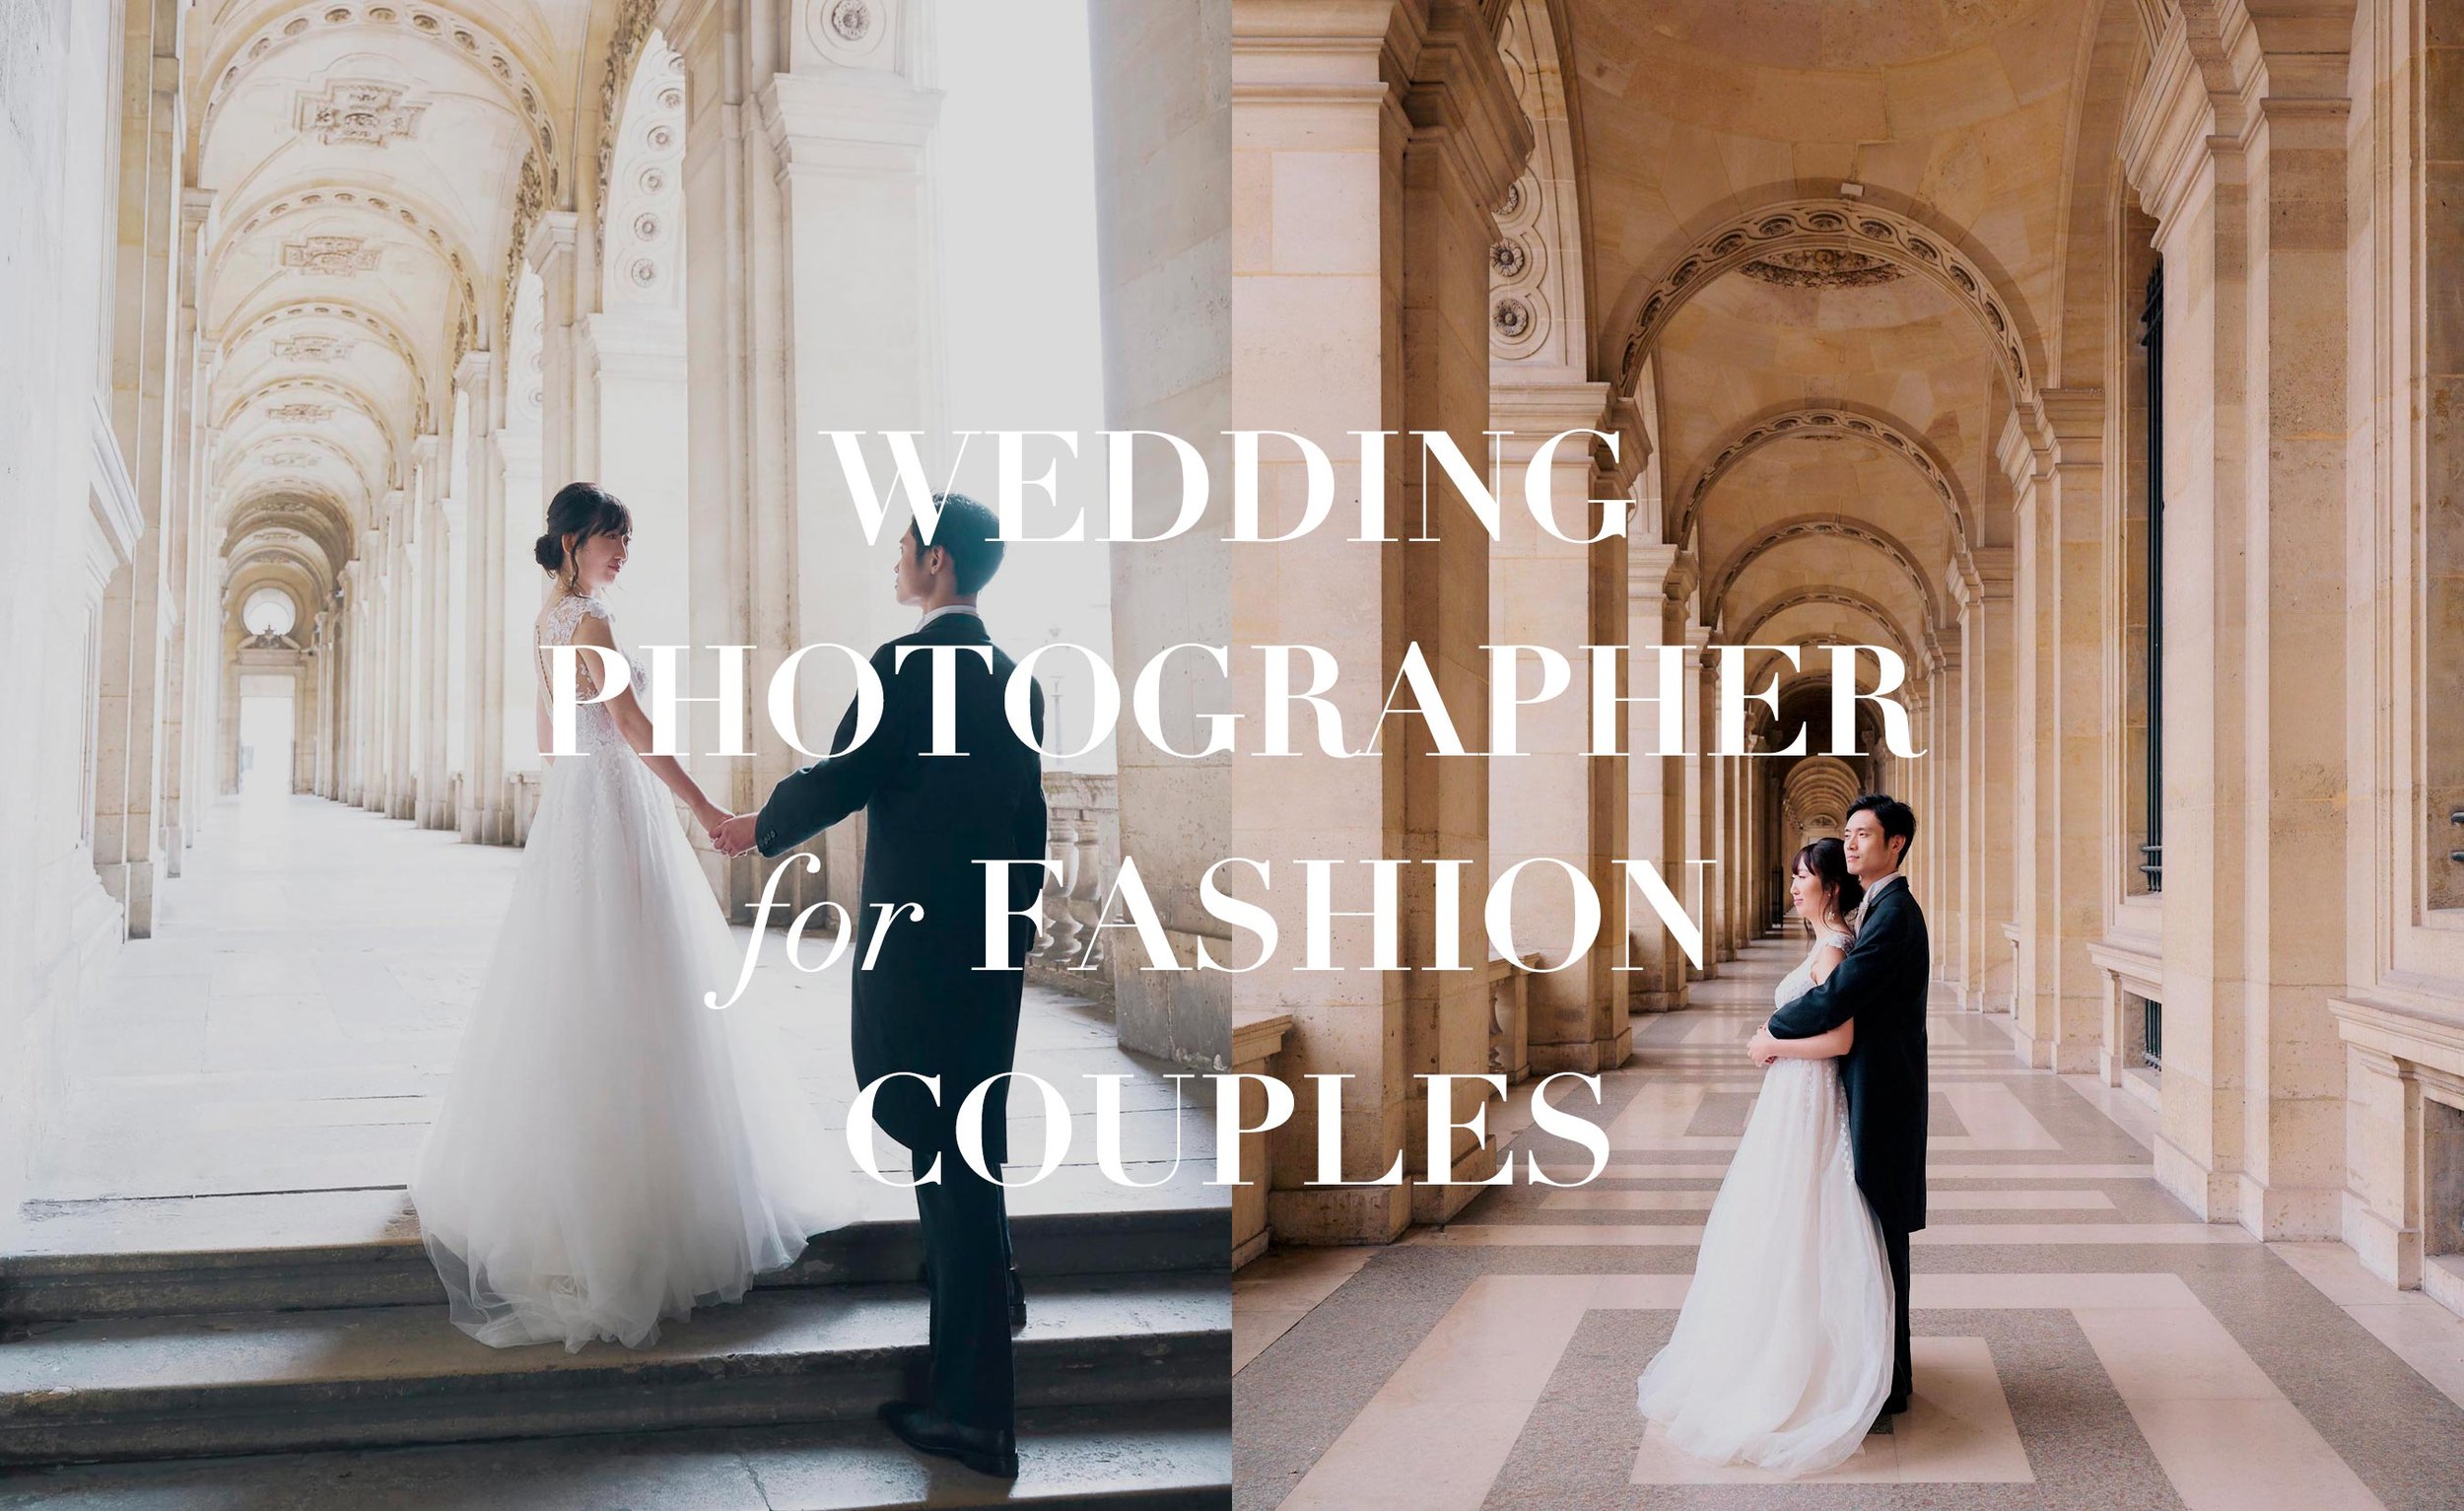 David_picchio_fashion_wedding_photographer_couple_paris_france_elopment_homepage_06a.jpg